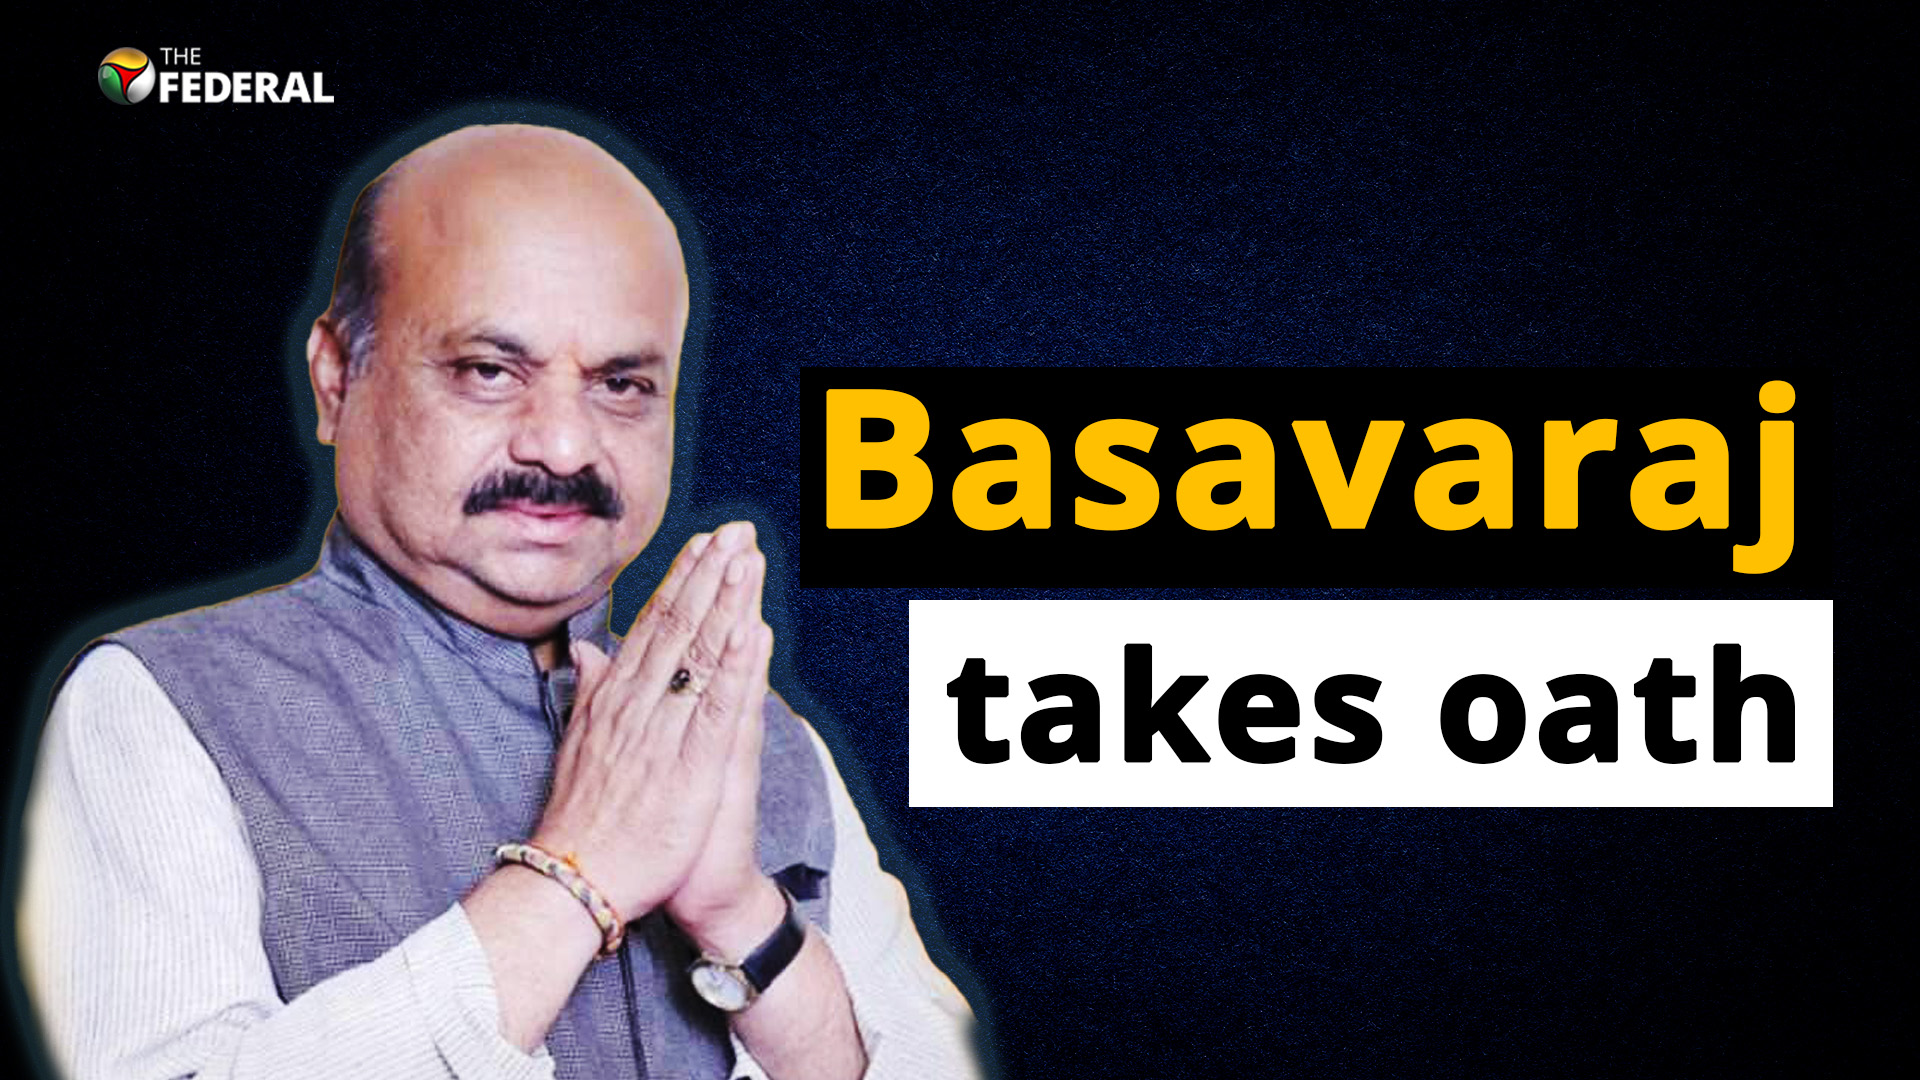 Basavaraj Bommai: Meet the new Karnataka chief minister